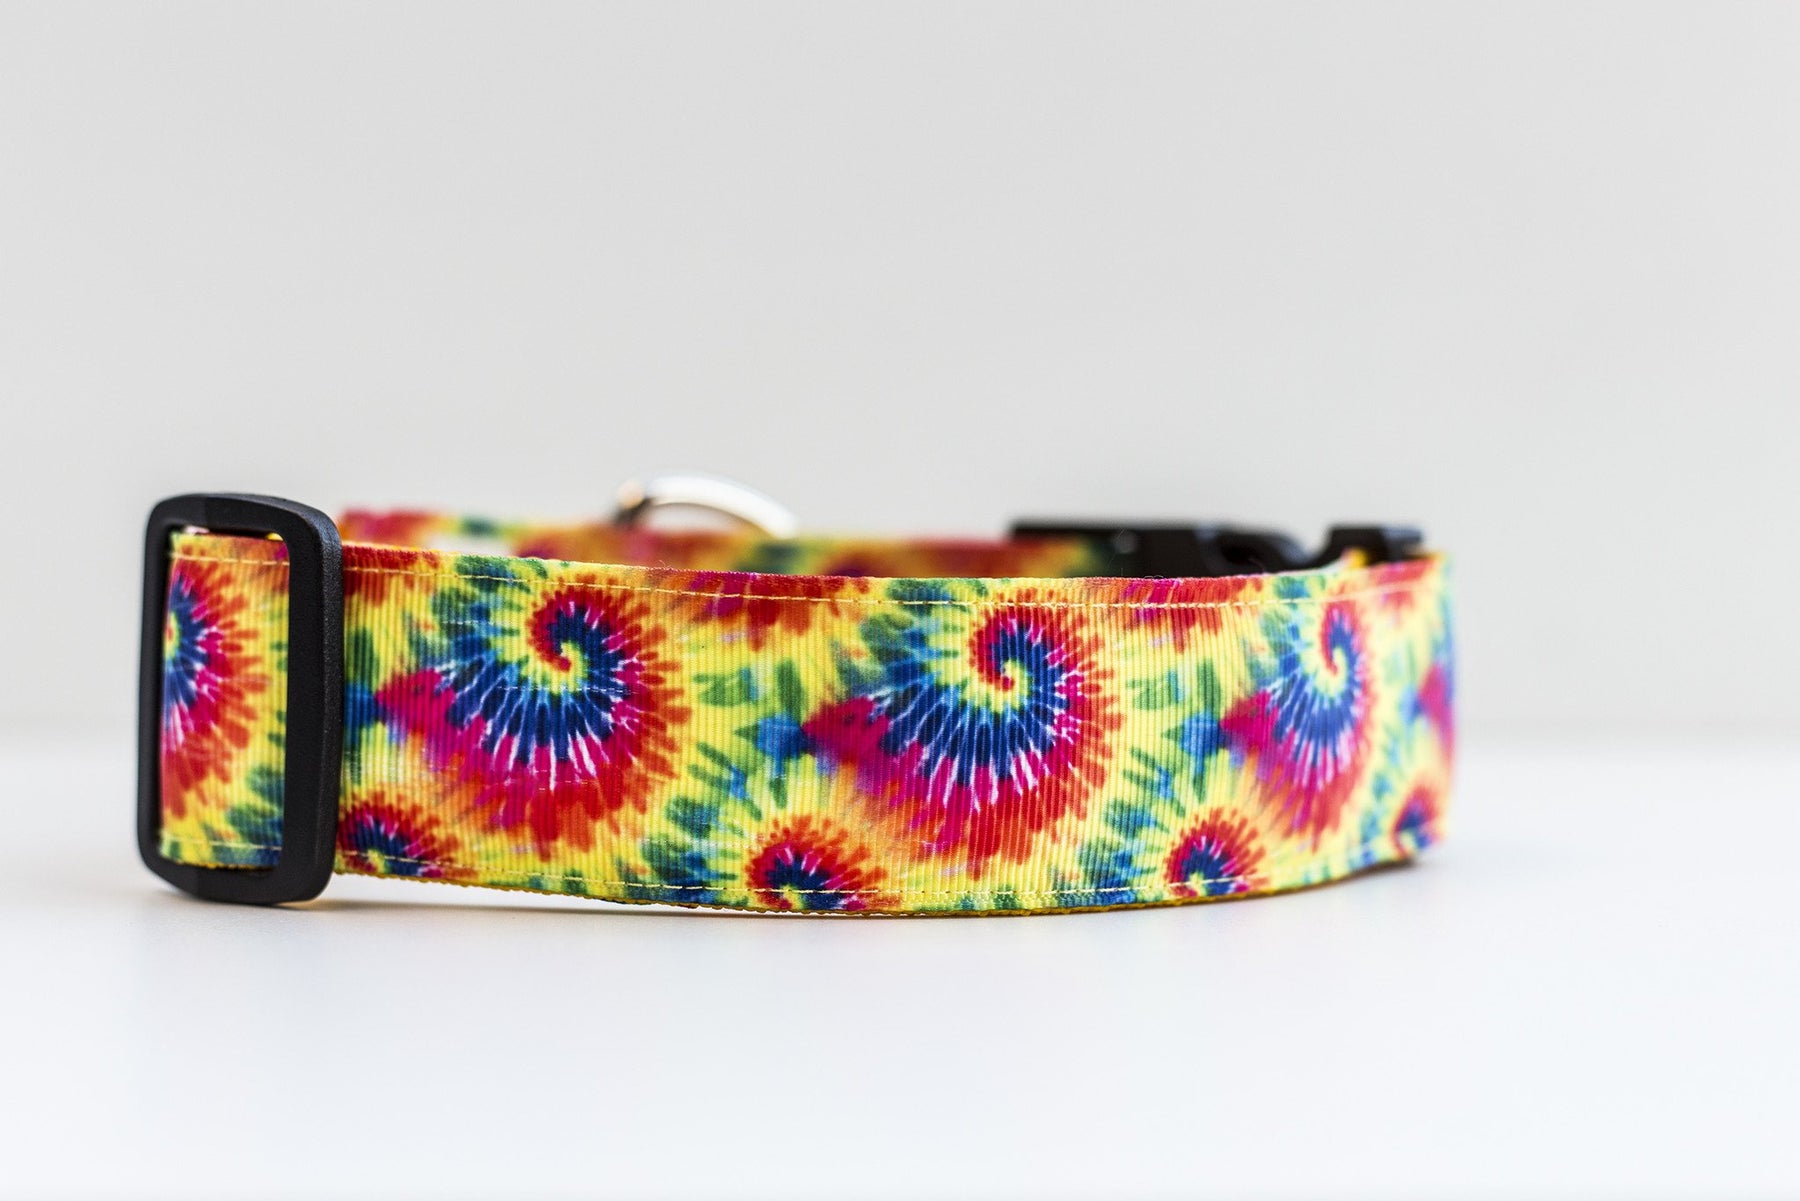 Rainbow Tie Dye Dog Collar – Kira's Pet Shop